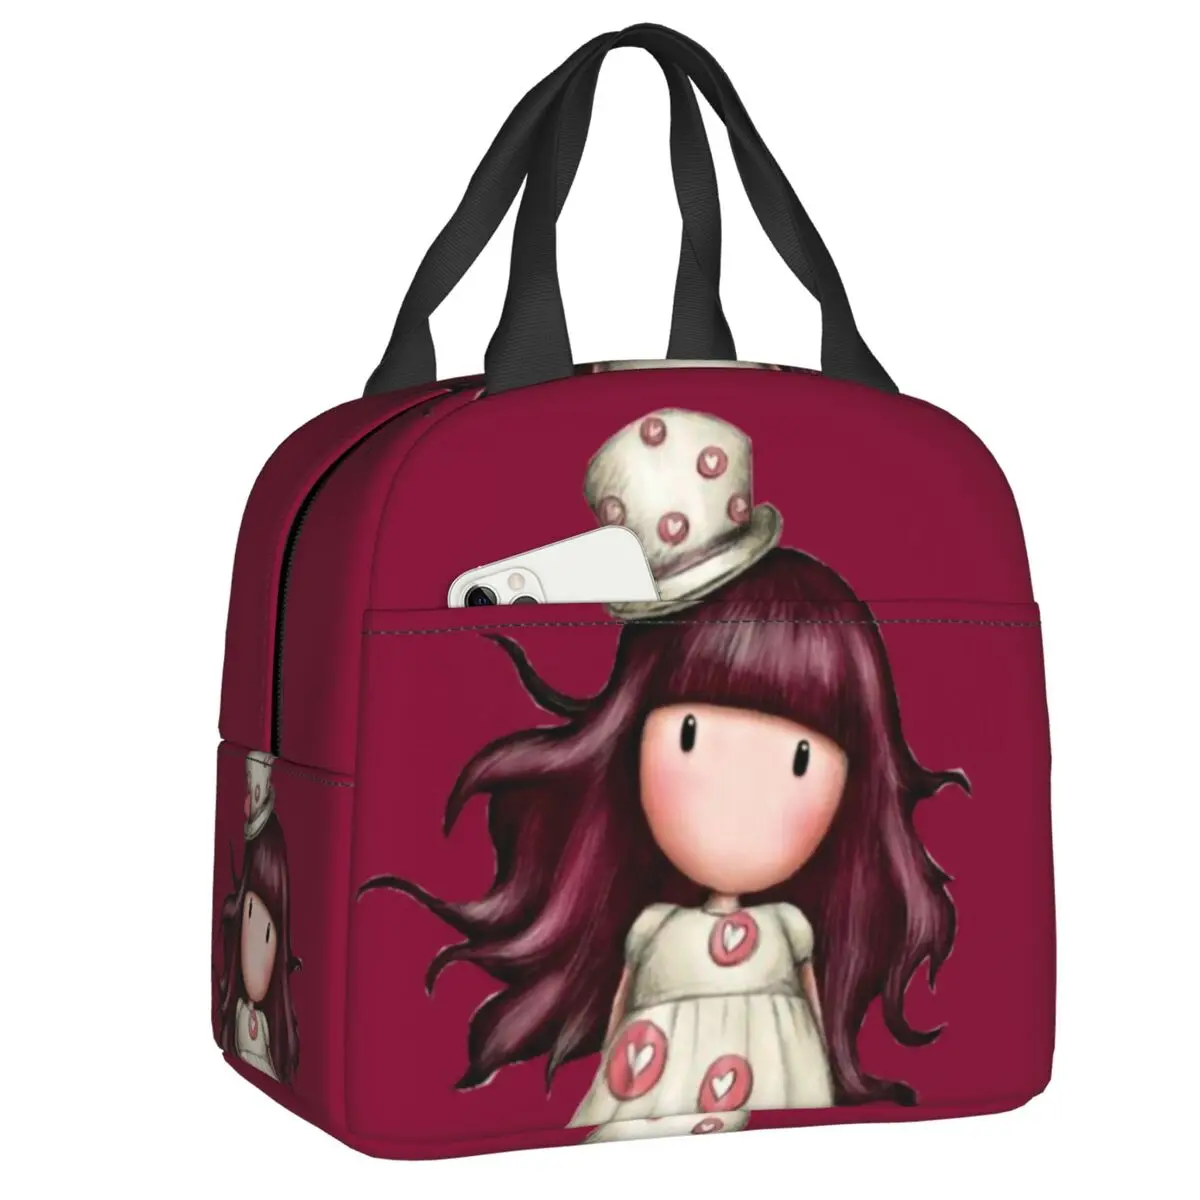 Gorjuss Santoro Insulated Lunch Bag for Women Resuable Girl Cartoon Doll Thermal Cooler Bento Box Office Work School